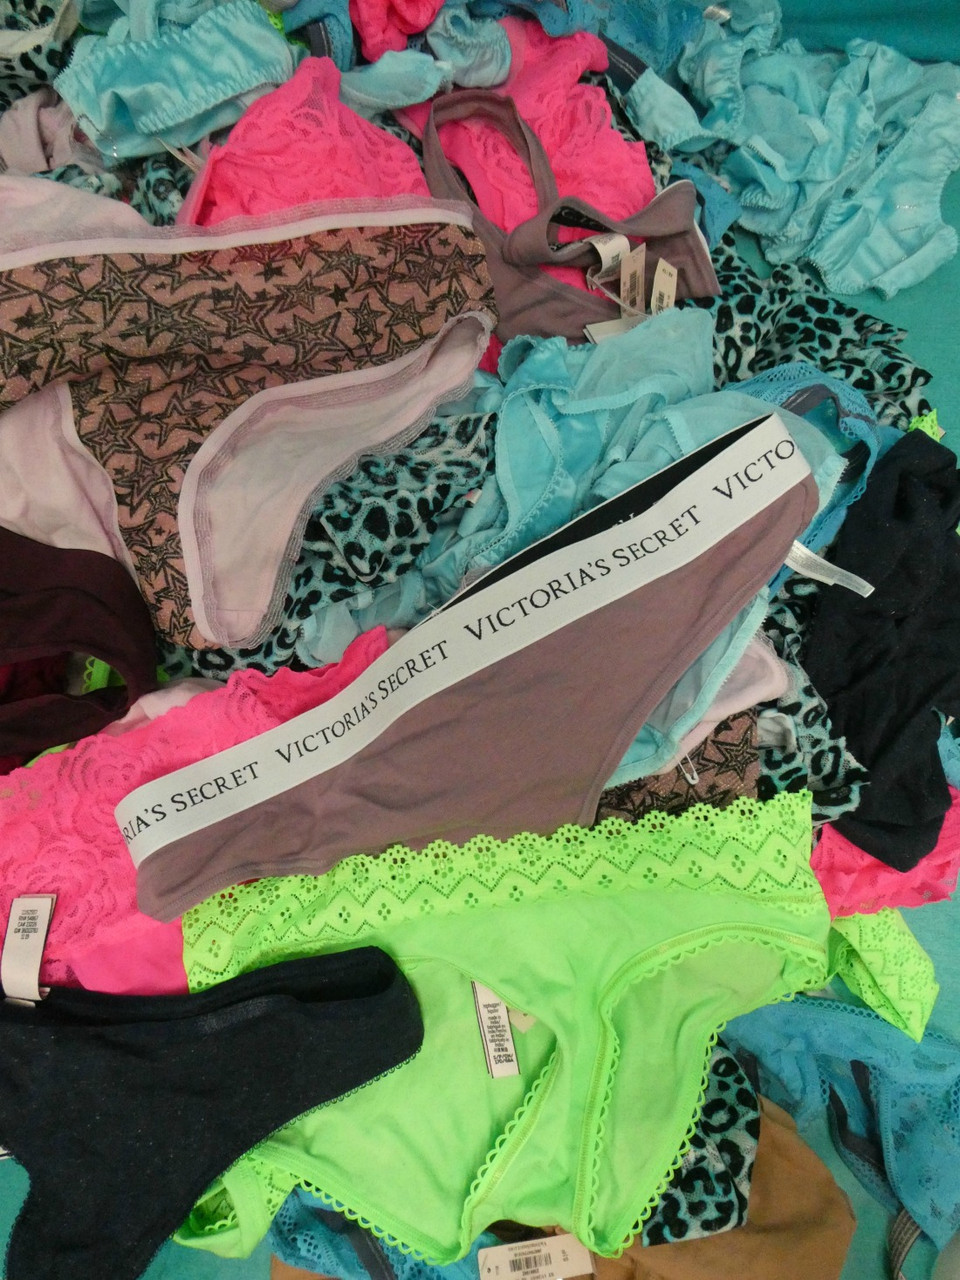 Wholesale Underwear Victoria Secret Cotton, Lace, Seamless, Shaping 